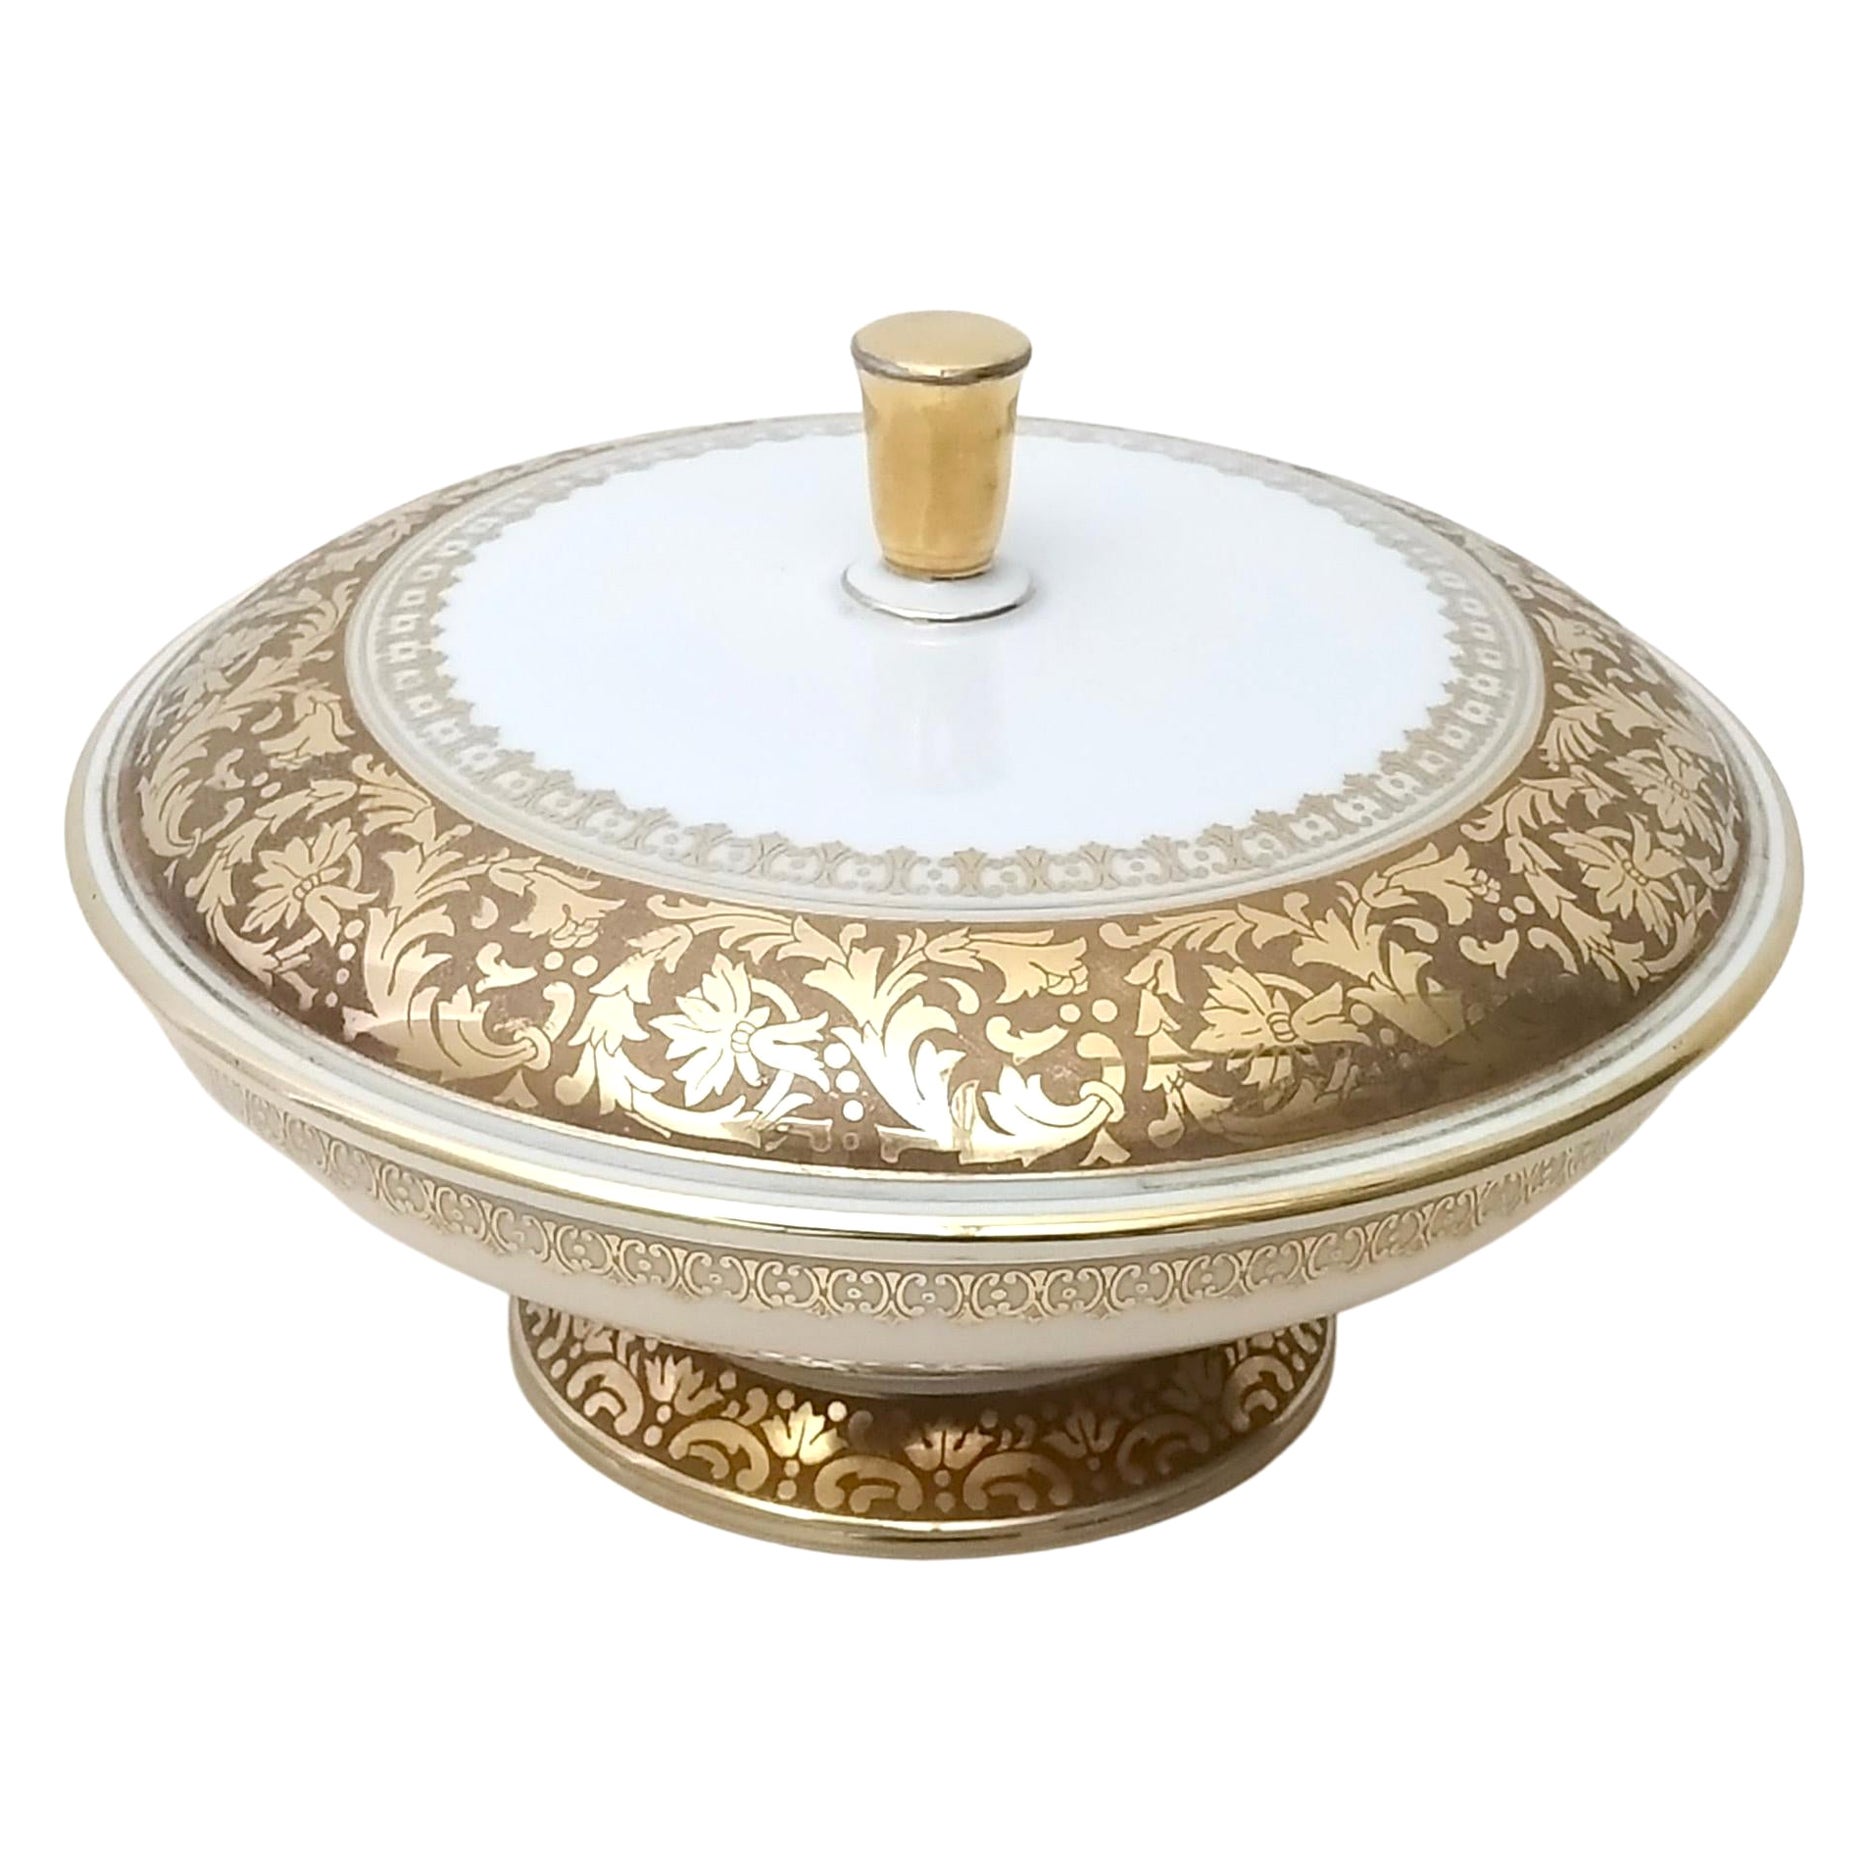 Vintage White Porcelain Trinket Bowl with Gold Details by Rosenthal For Sale